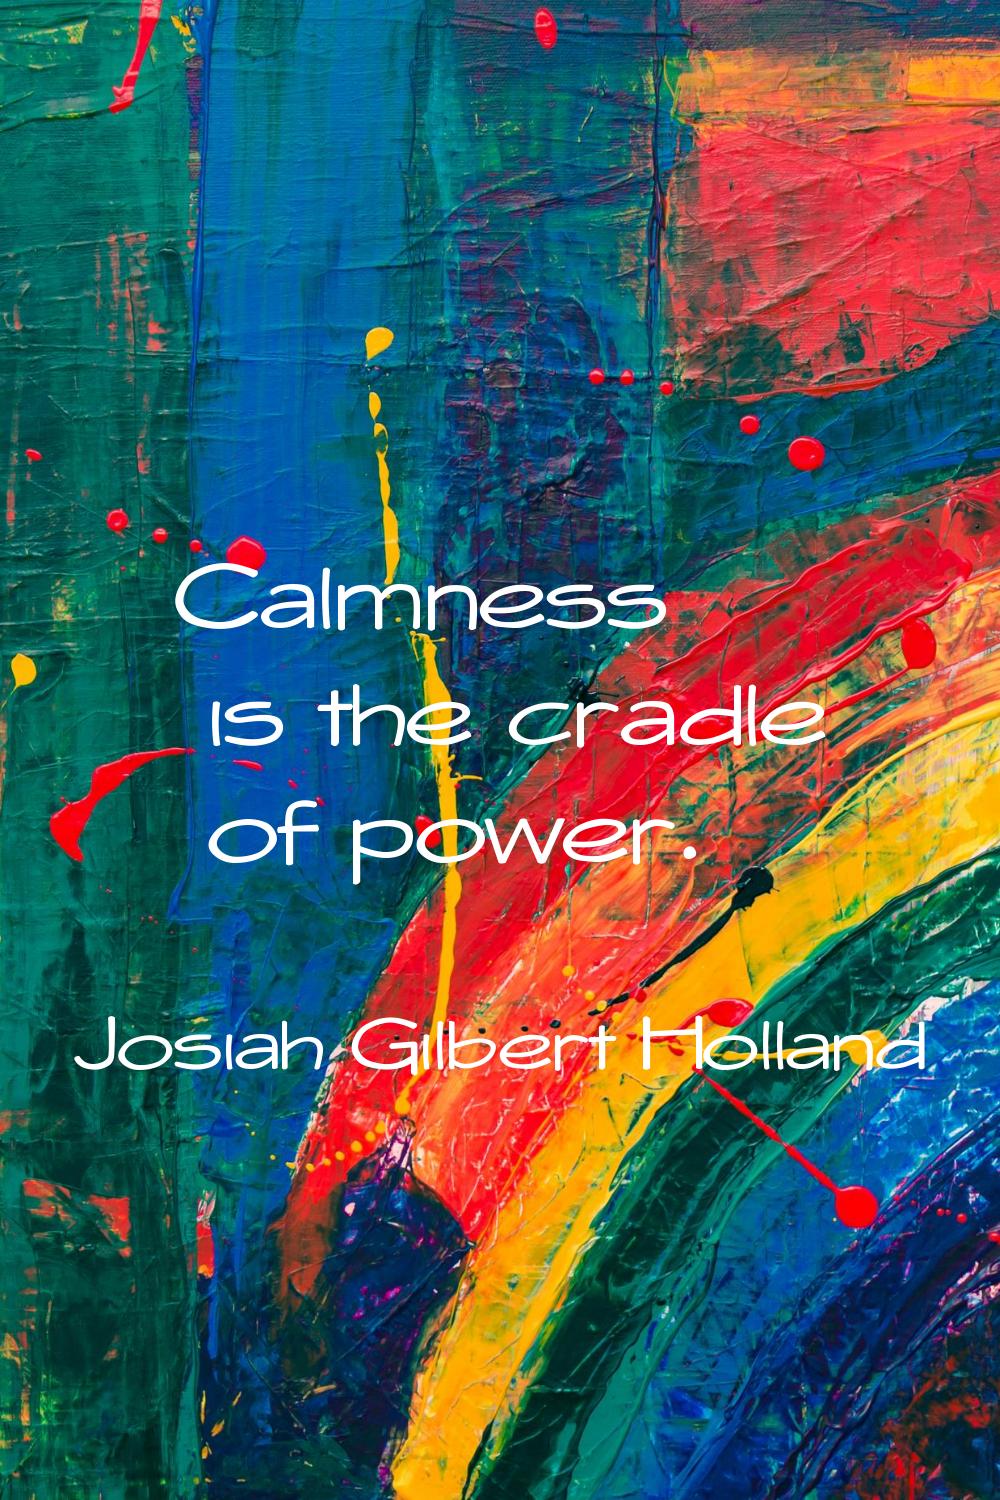 Calmness is the cradle of power.